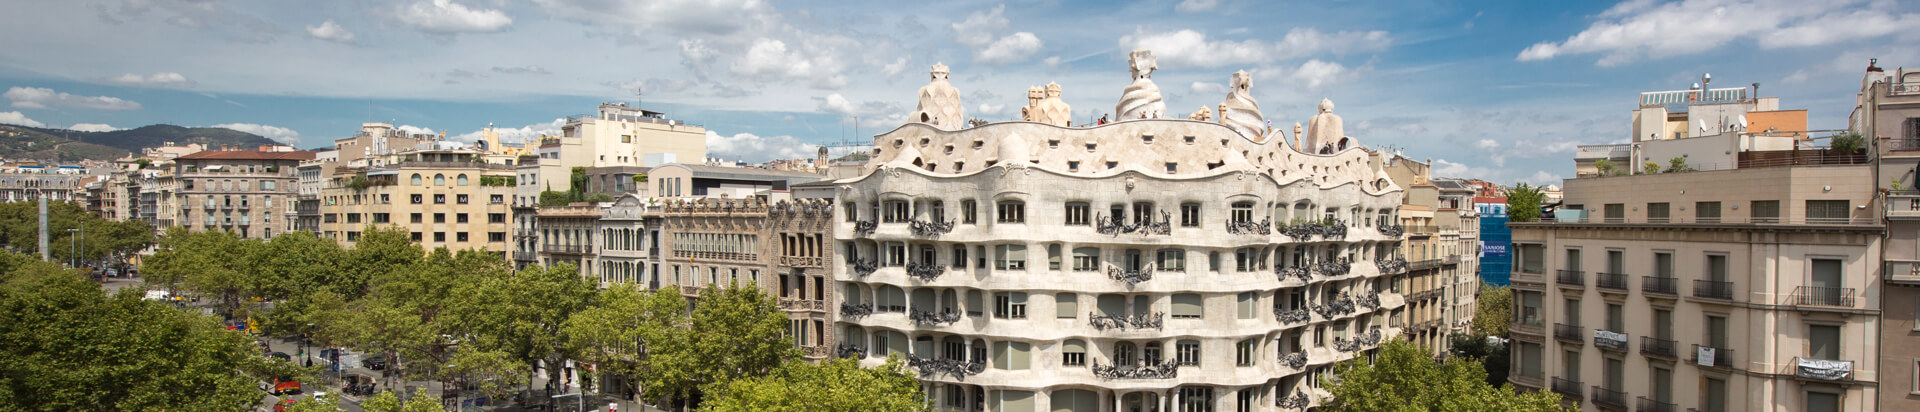 casa mila gaudi modernismo barcelona